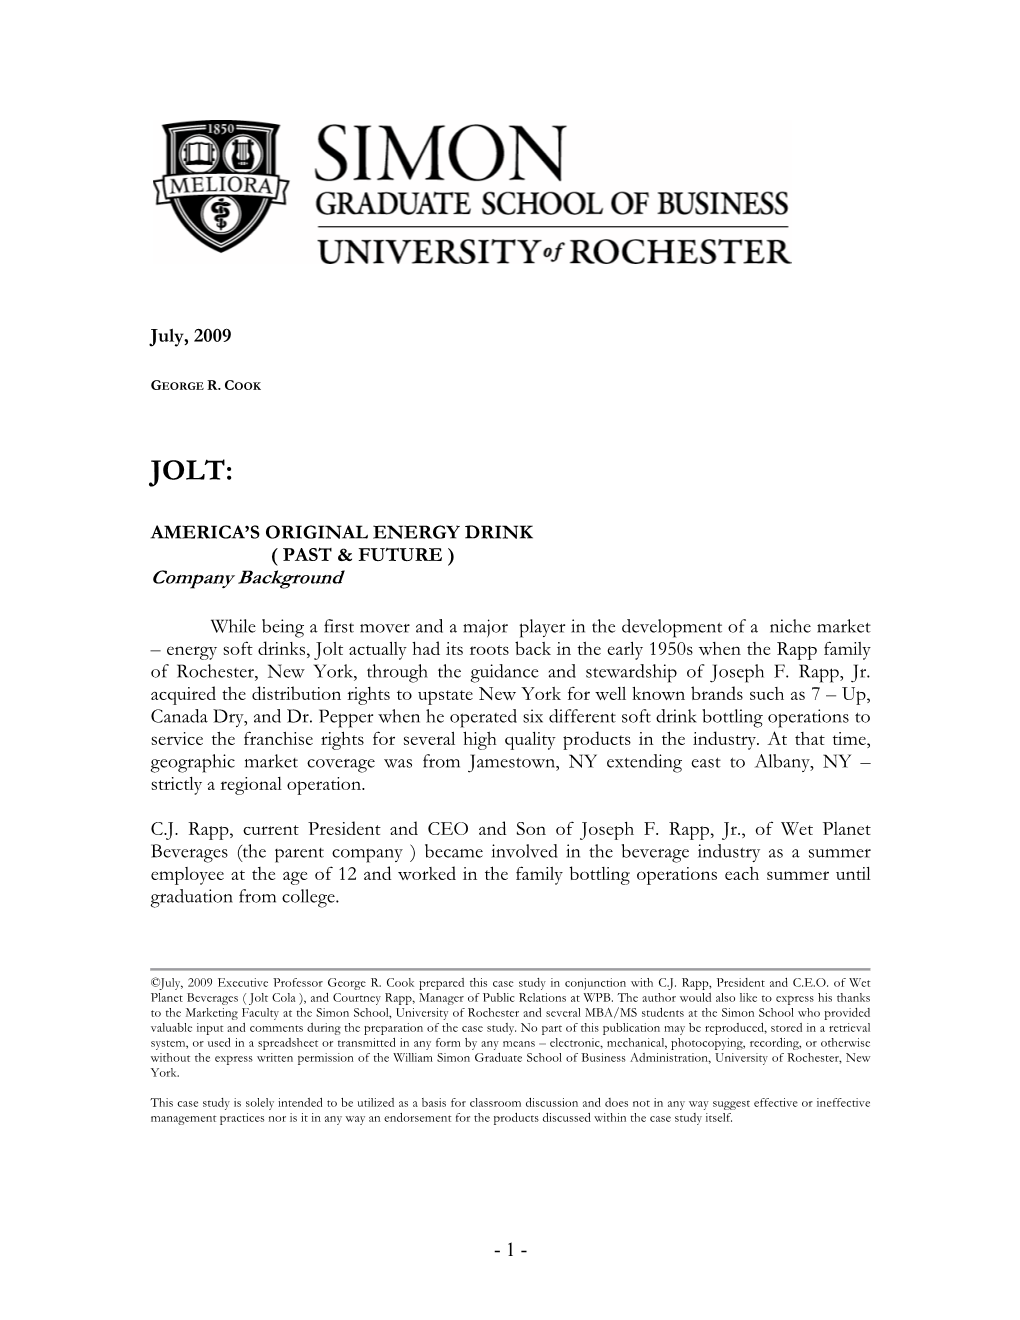 William E Simon Graduate School of Business